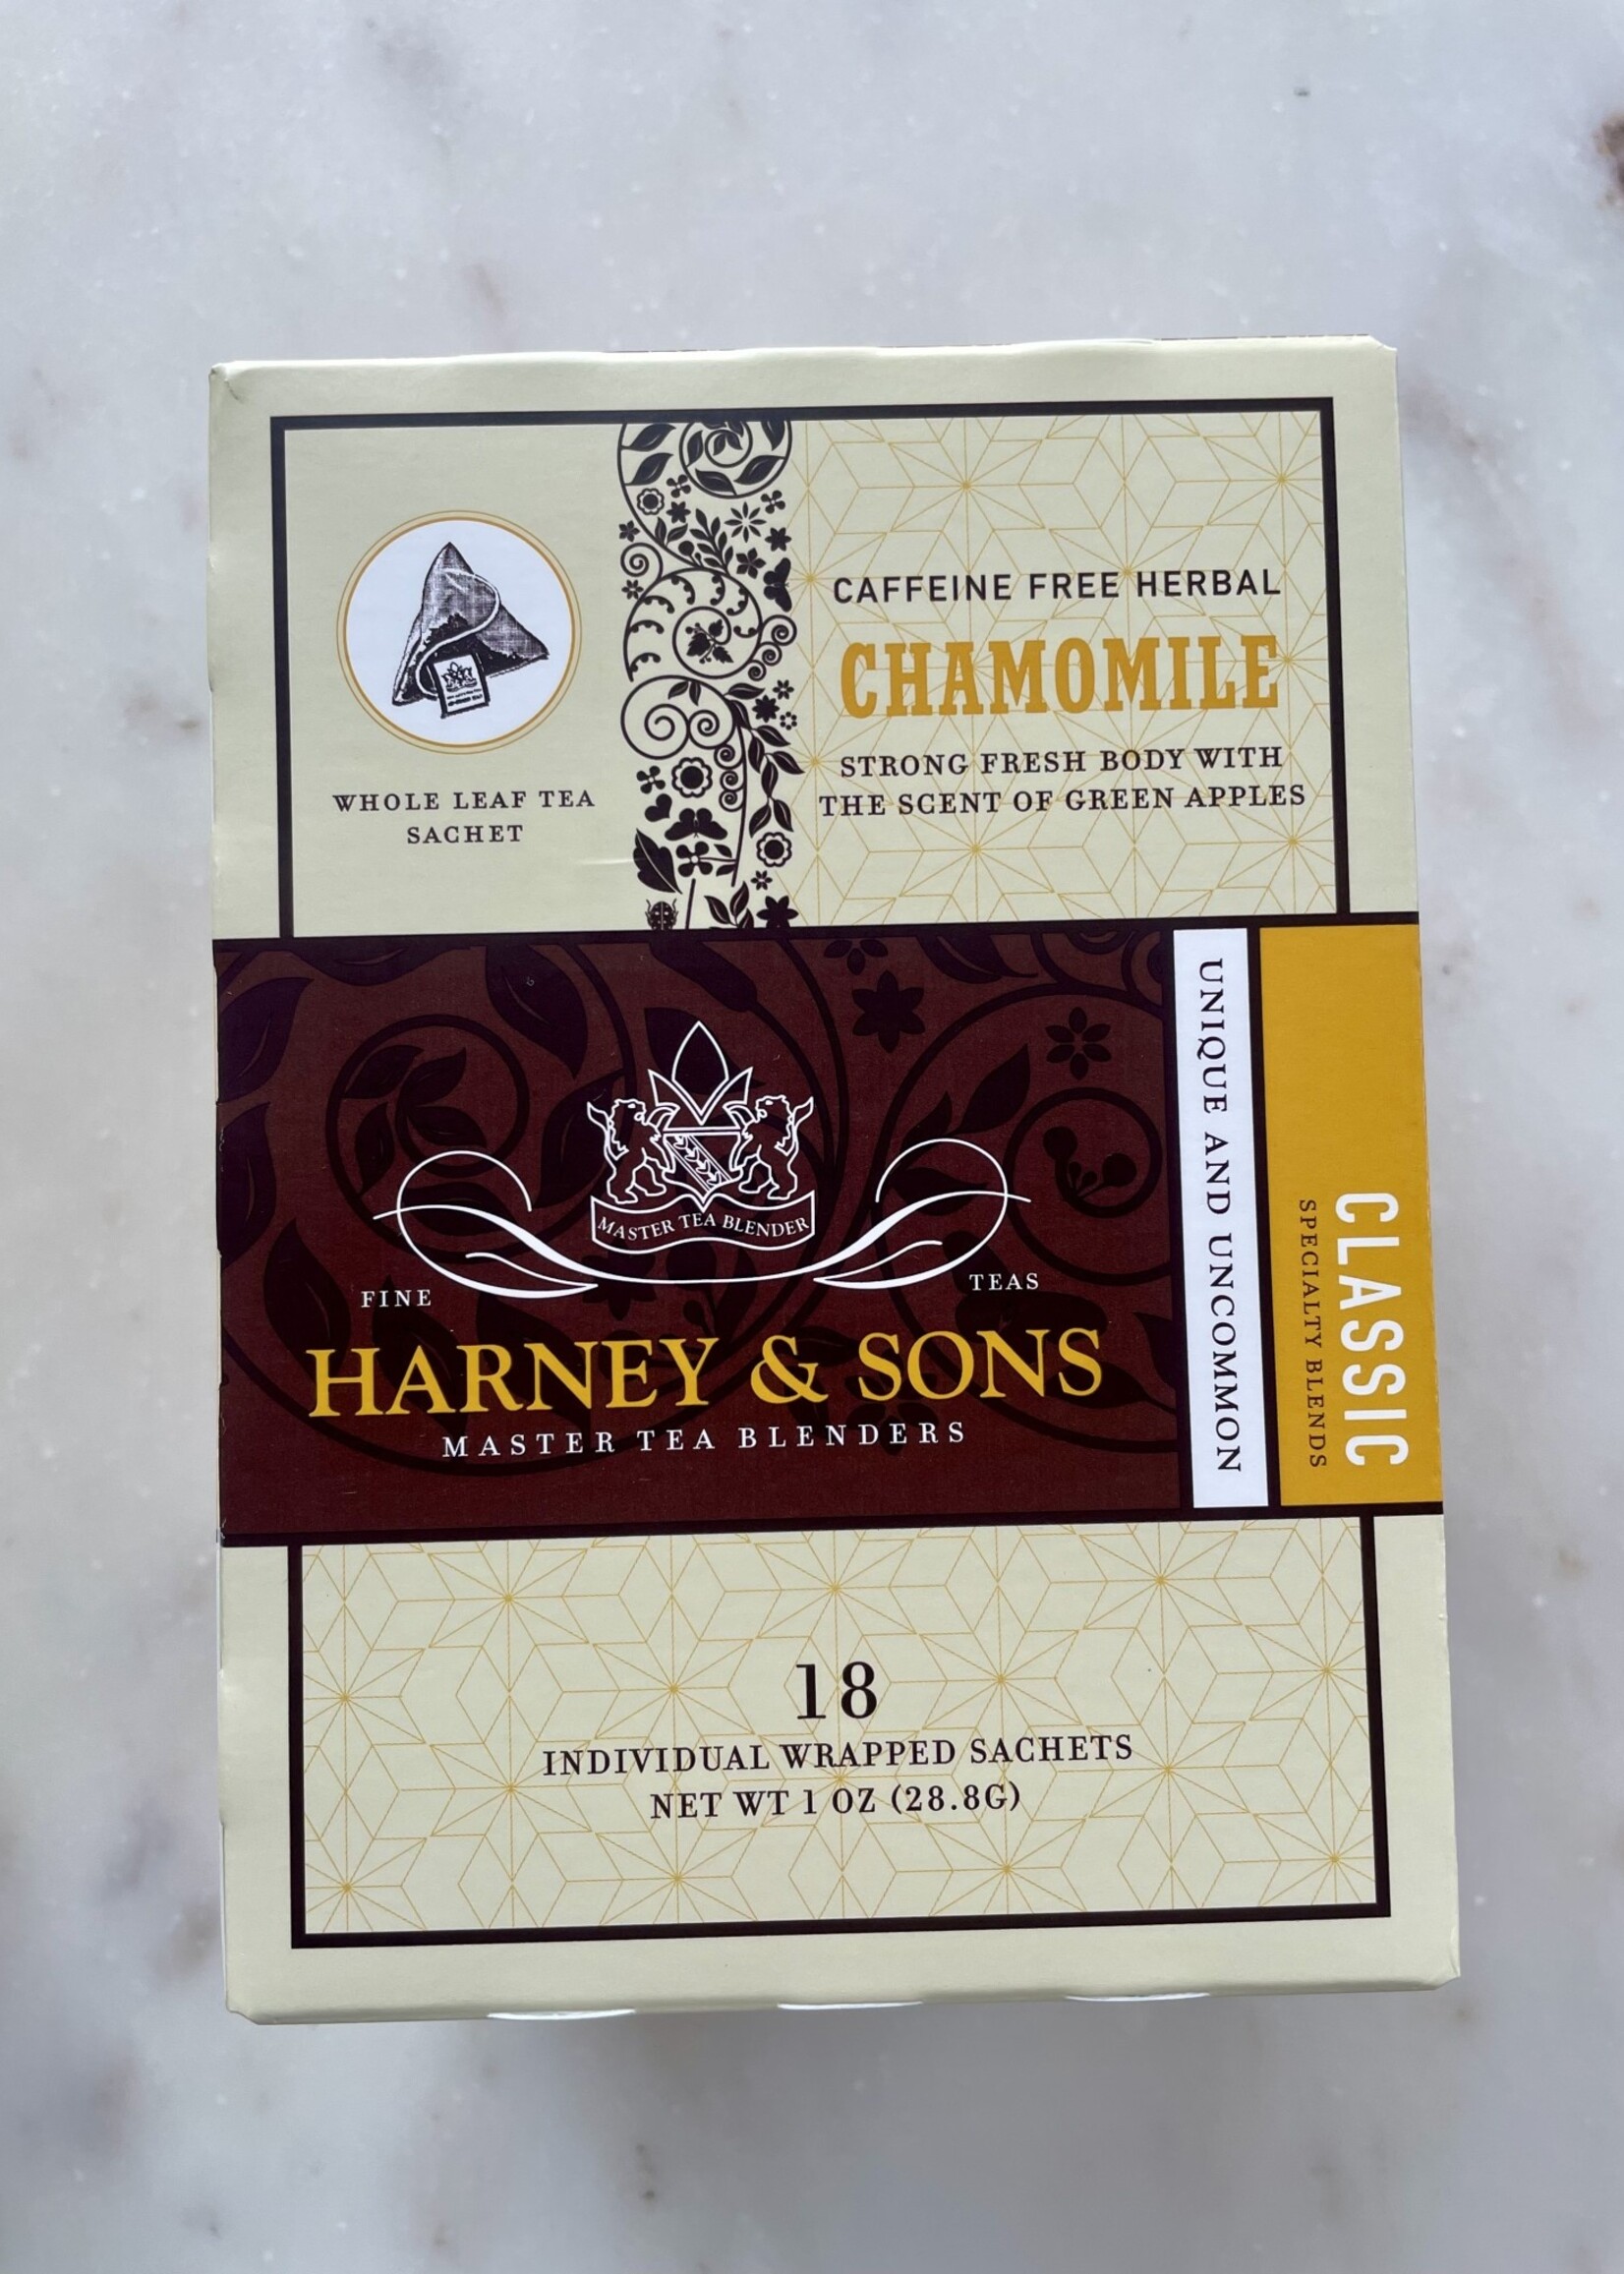 Harney & Sons, Chamomile Tea Whole Leaf Sachet (Box of 18 individuals wrapped sachets) 1oz (28.8g)